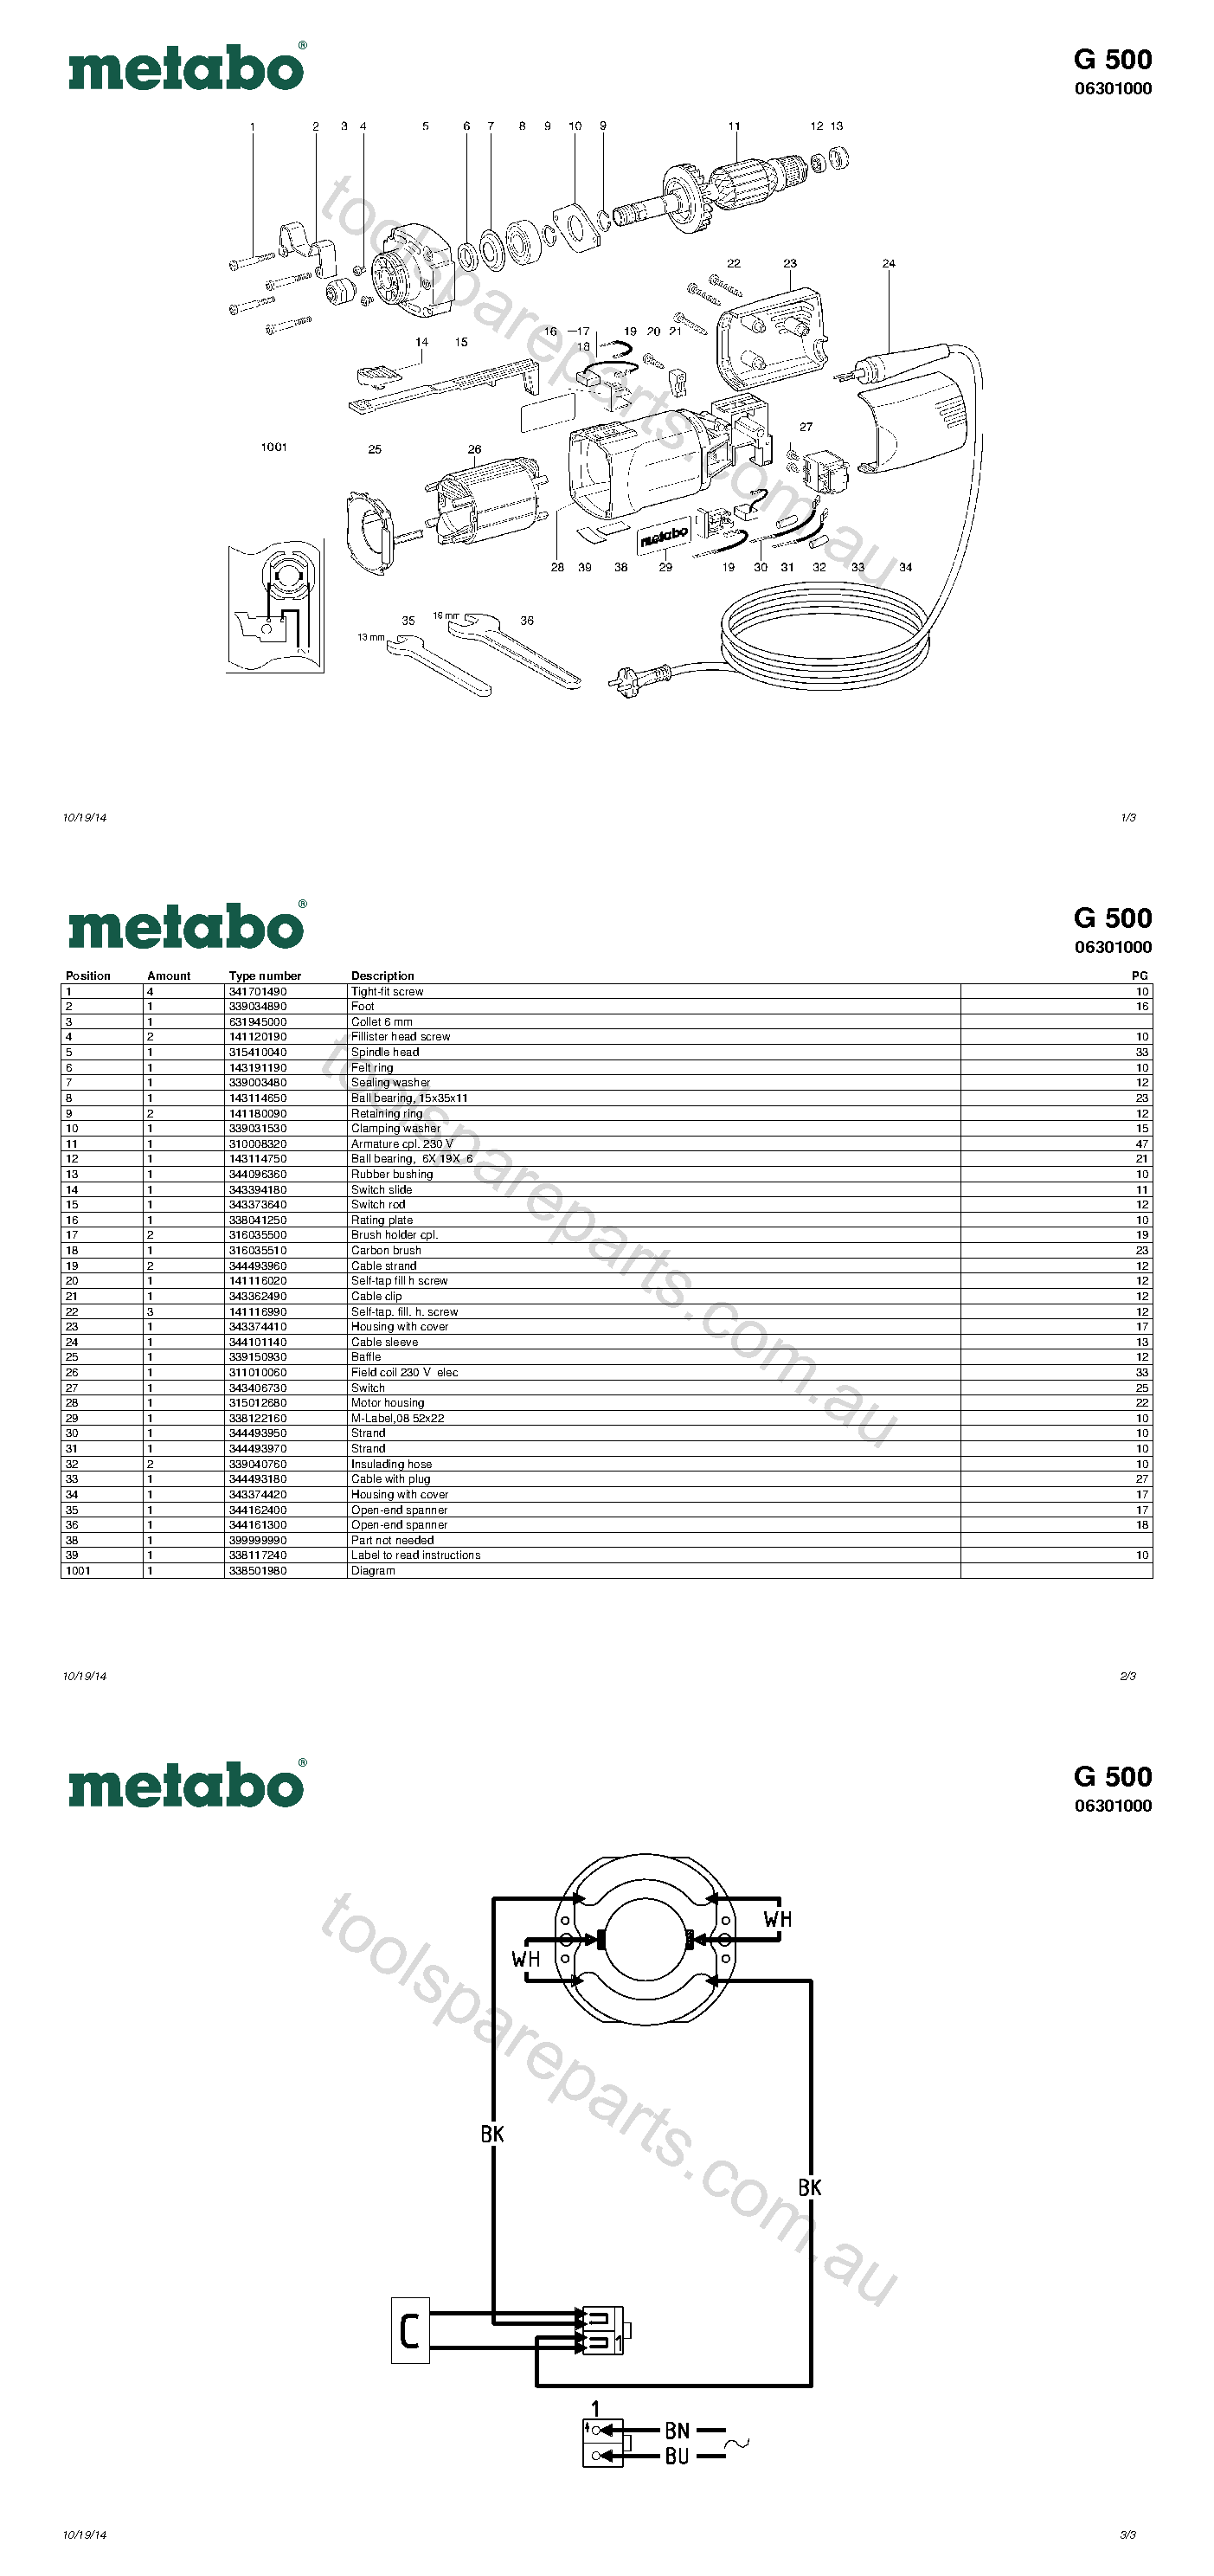 Metabo G 500 06301000  Diagram 1